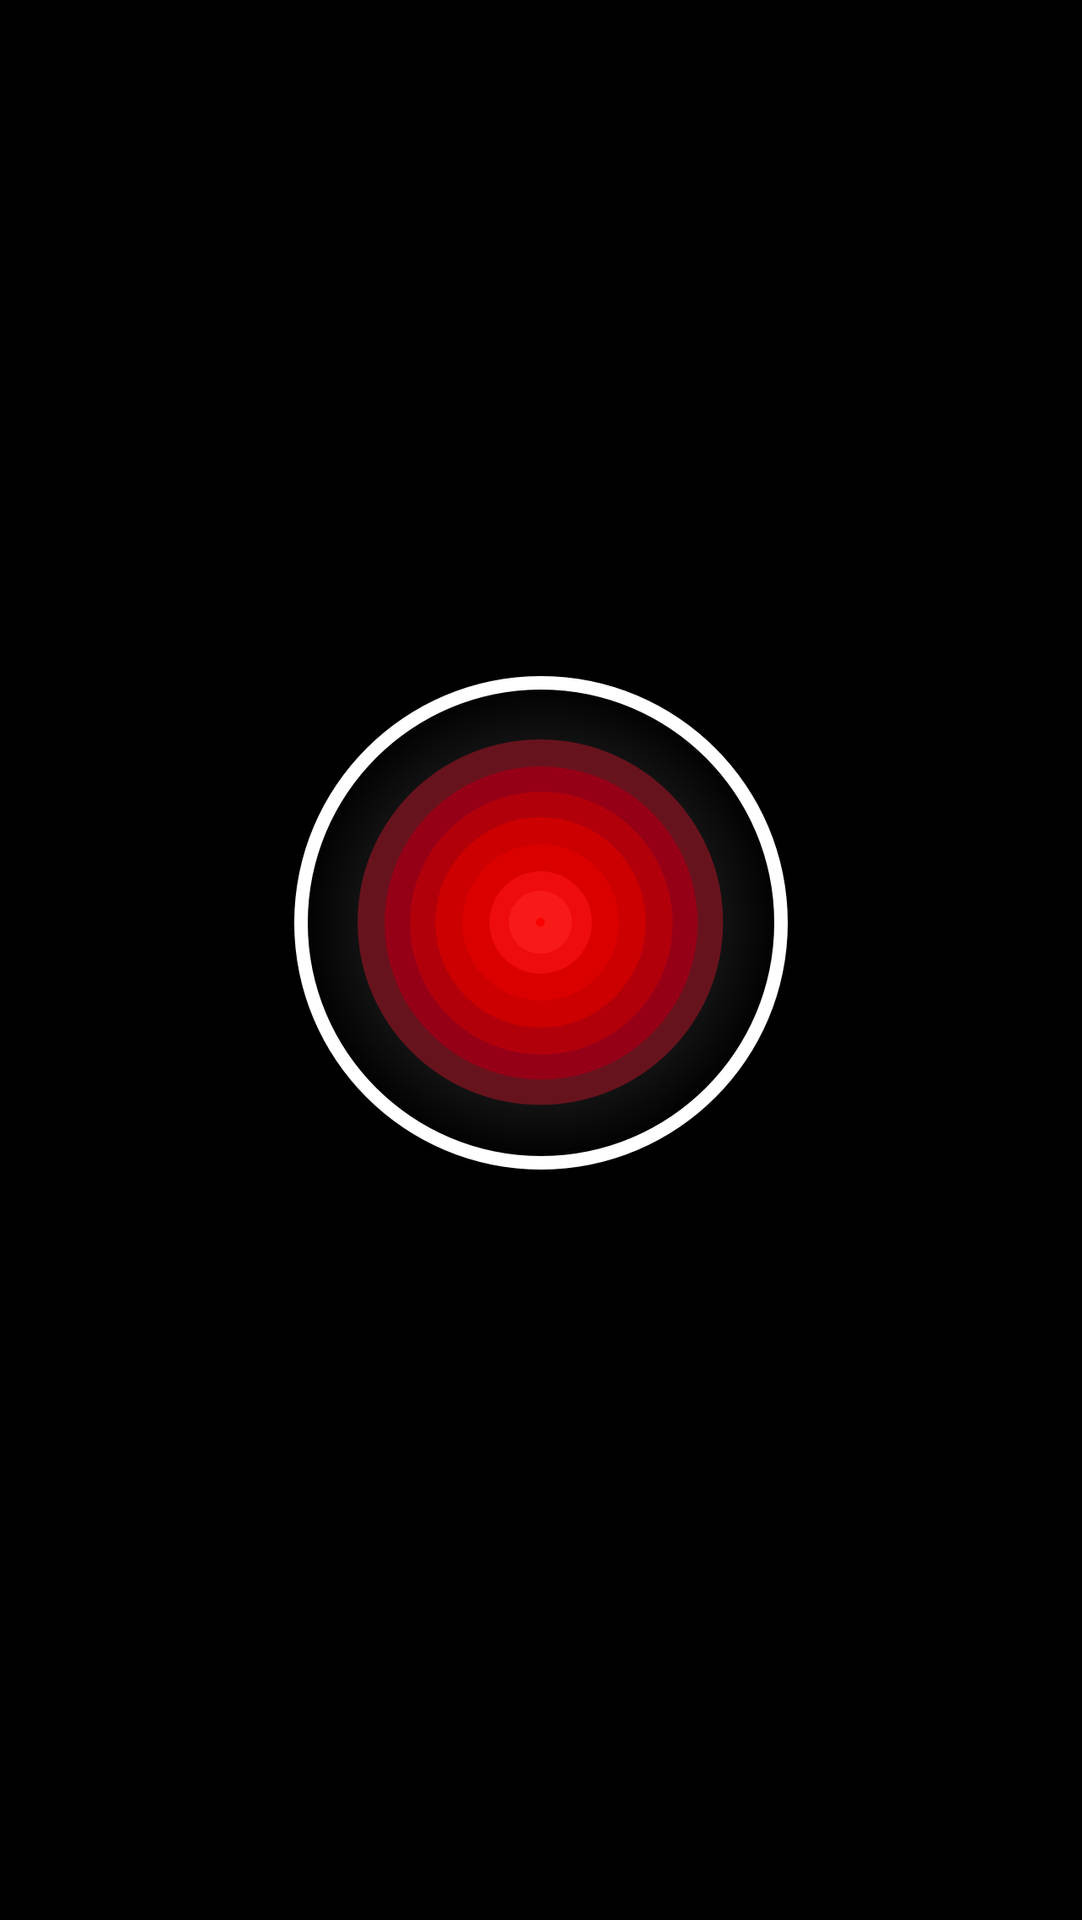 Hal 9000 Phone Red Eye Background